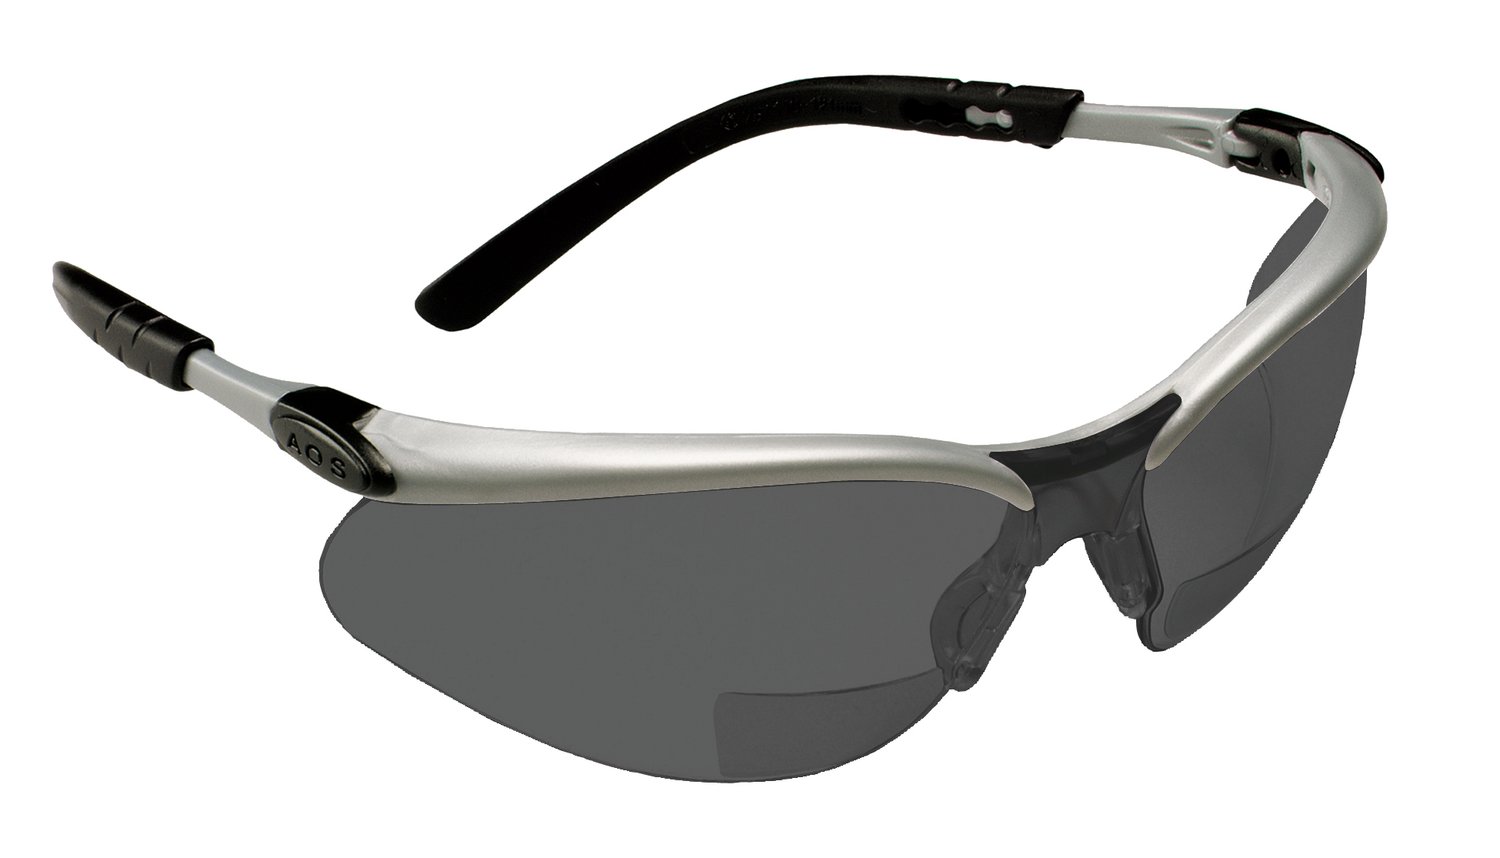 7000127492 - 3M BX Reader Protective Eyewear 11377-00000-20, Grey Lens, Silver
Frame, +1.5 Diopter, 20 ea/Case